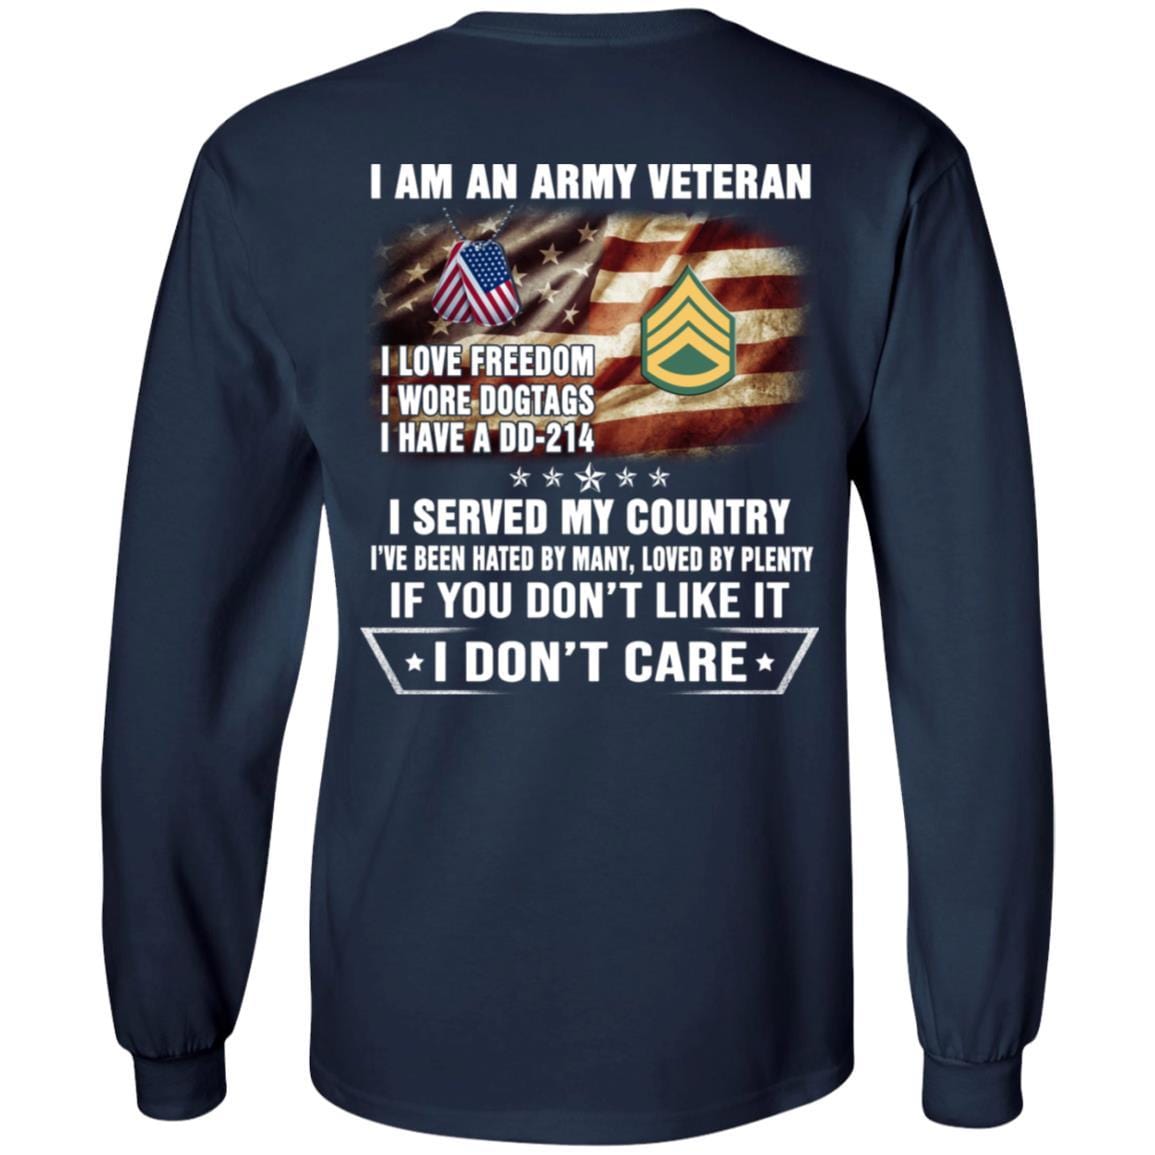 T-Shirt "I Am An Army Veteran" E-6 Staff Sergeant(SSG)Rank On Back-TShirt-Army-Veterans Nation